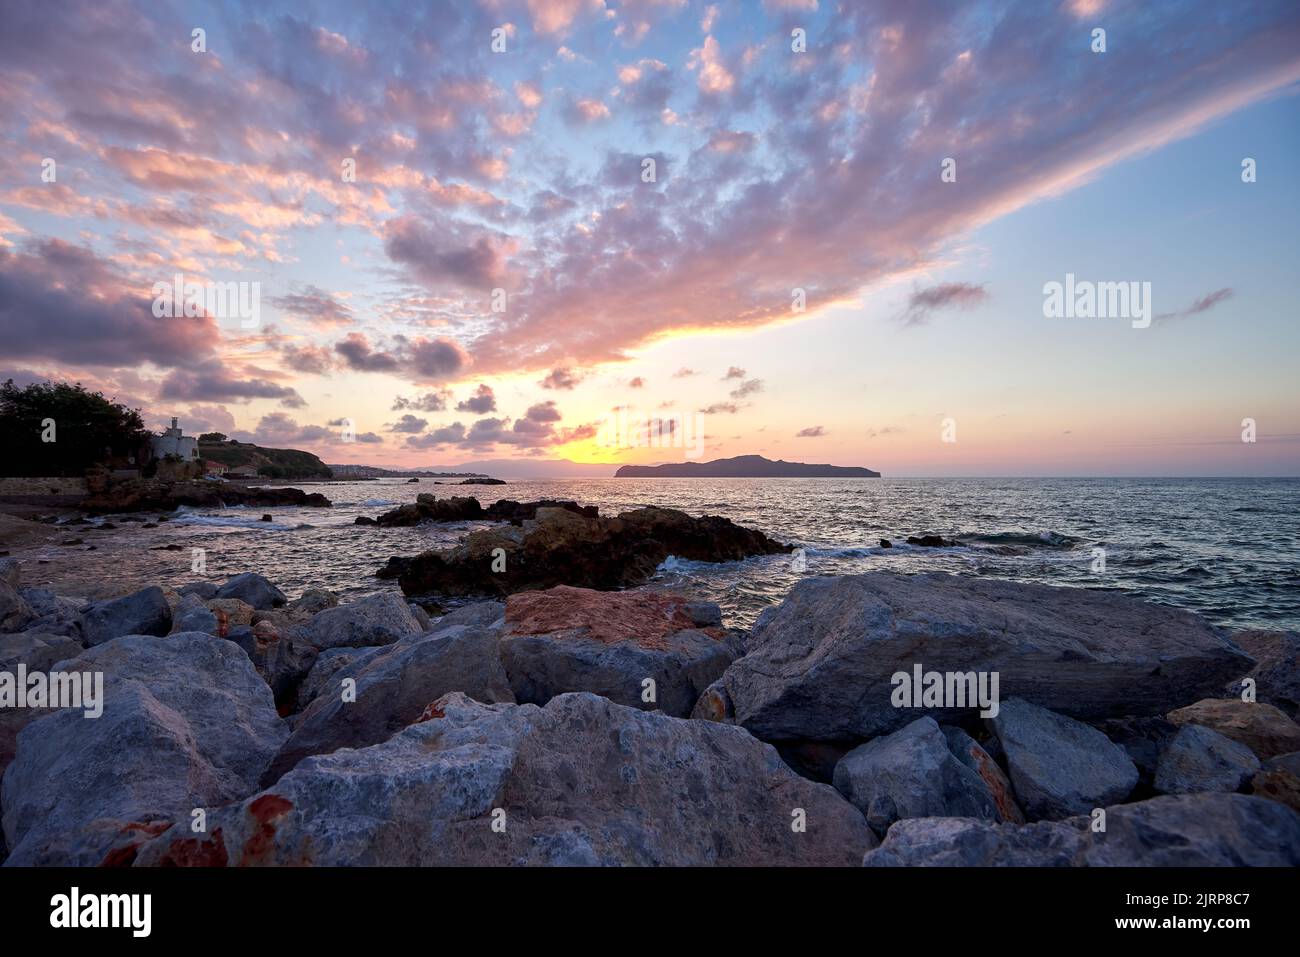 Wunderschönes Meer bei Sonnenuntergang in Chania Kreta - Griechenland Stockfoto